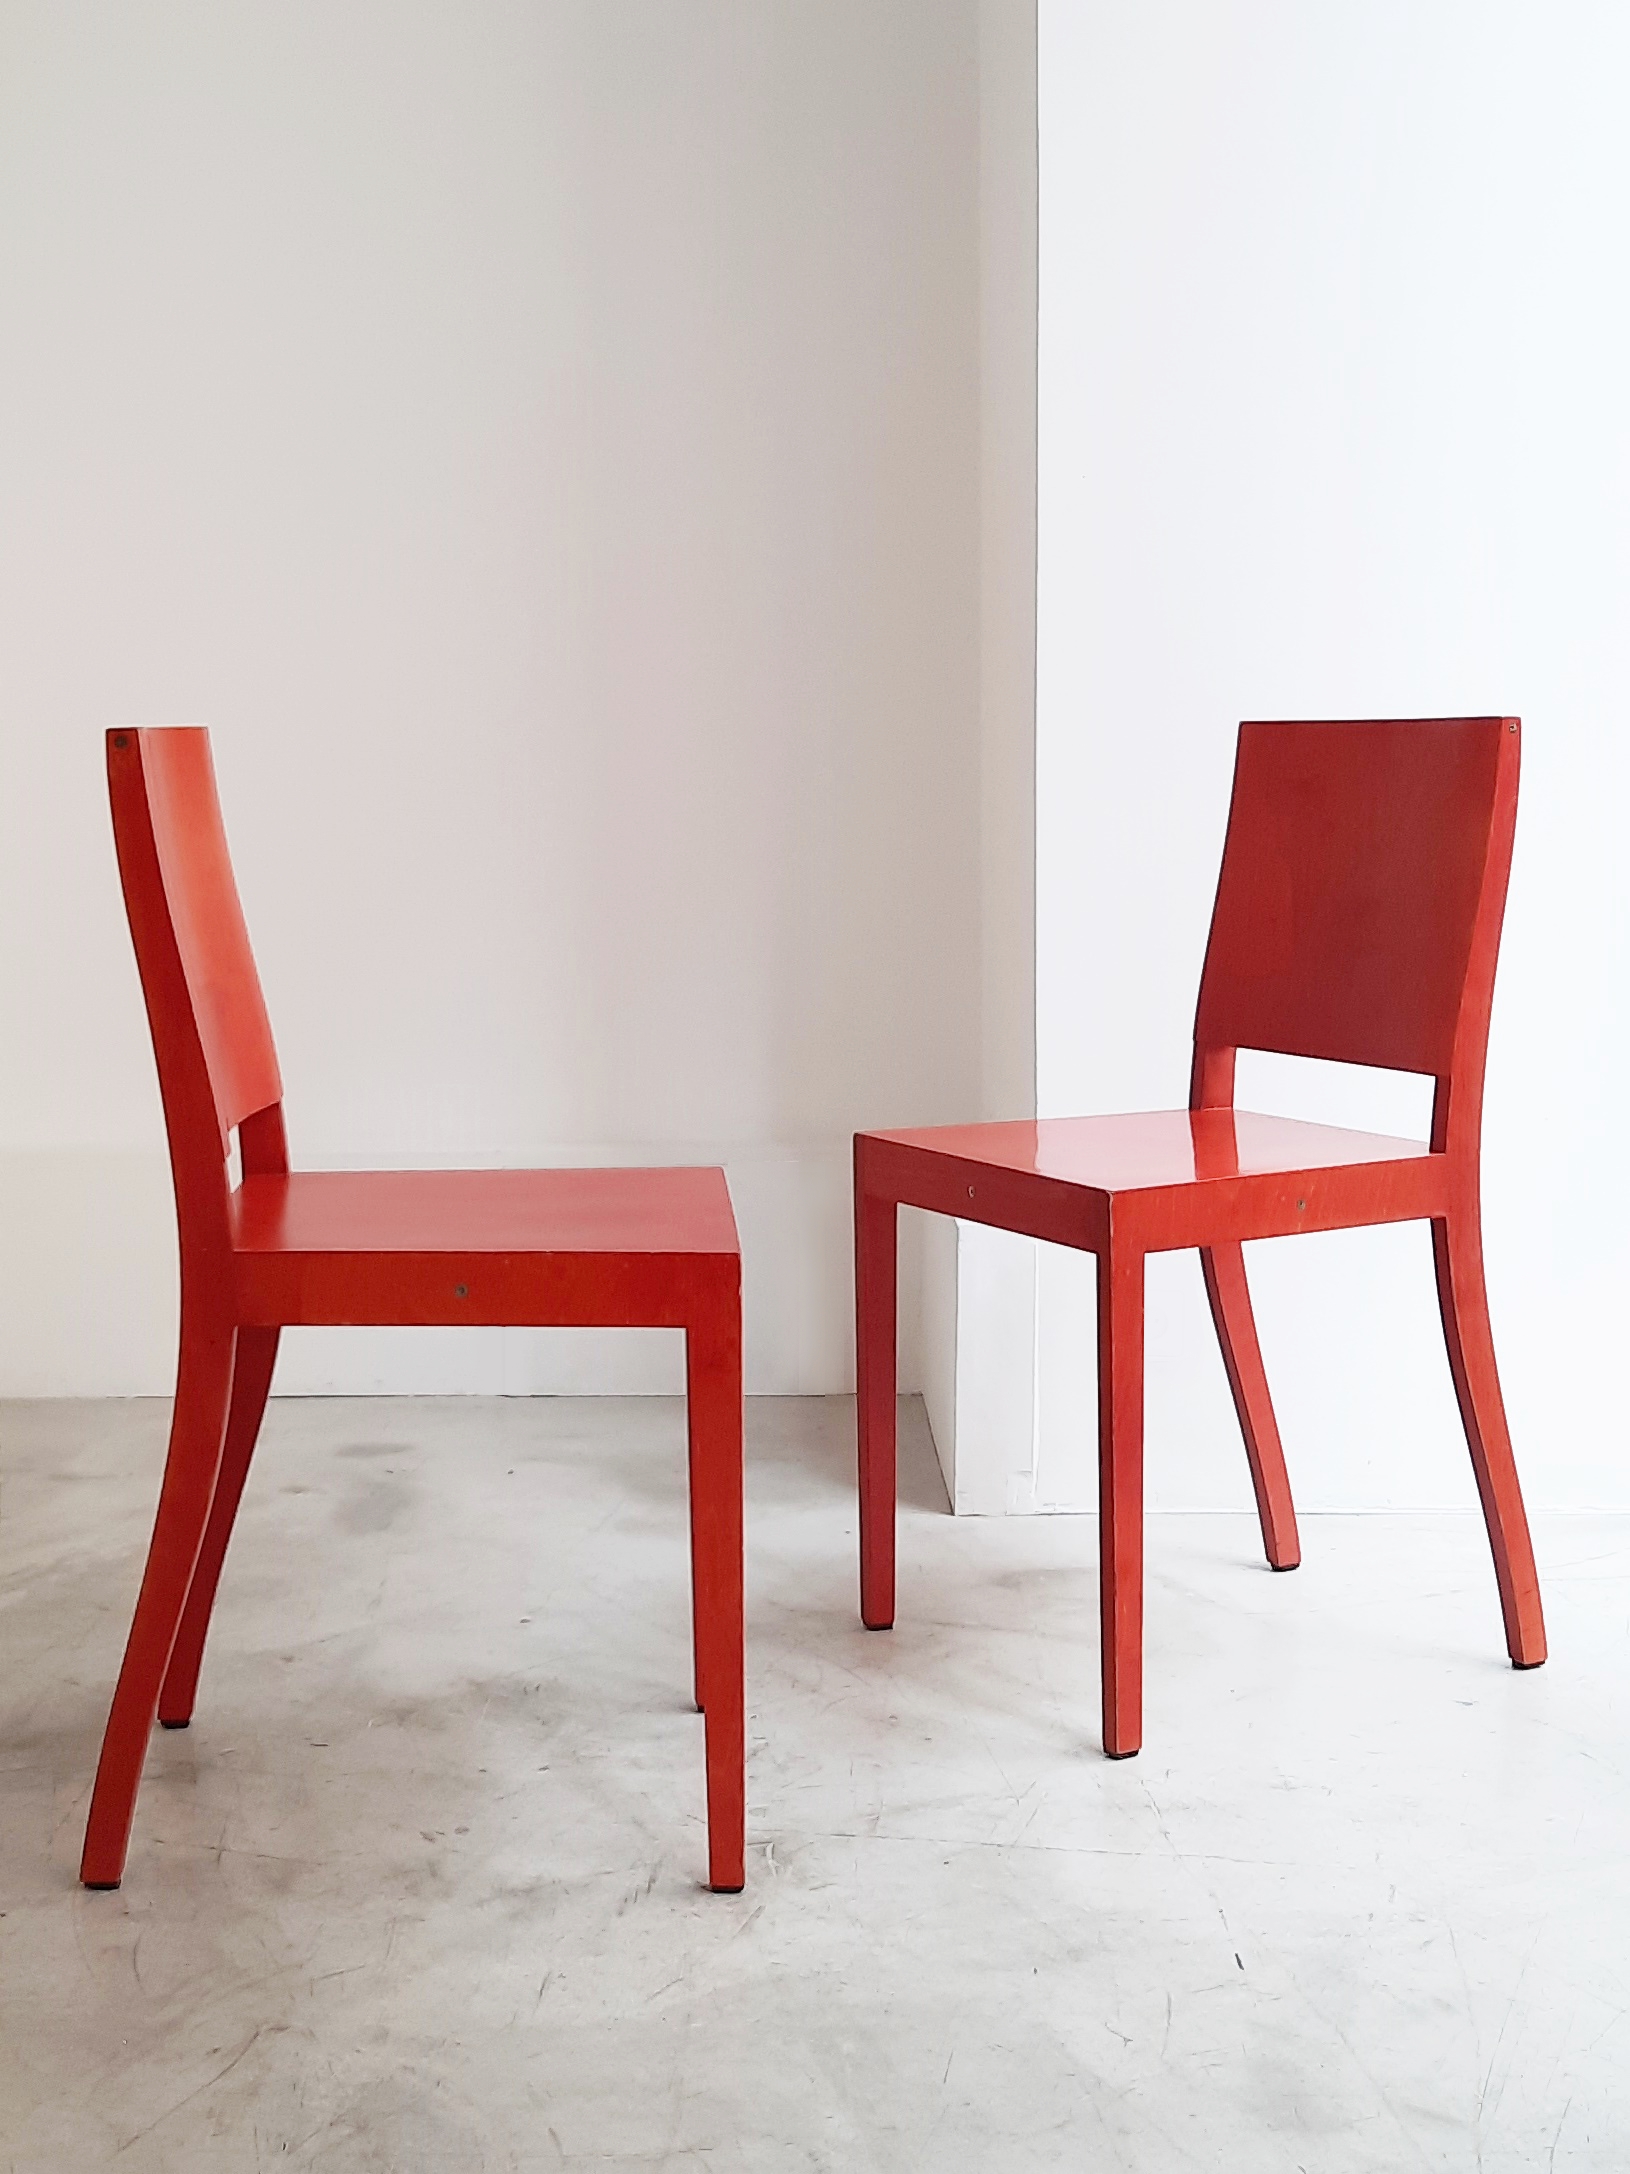 Pair of chairs “Plywood” MORRISON Jasper